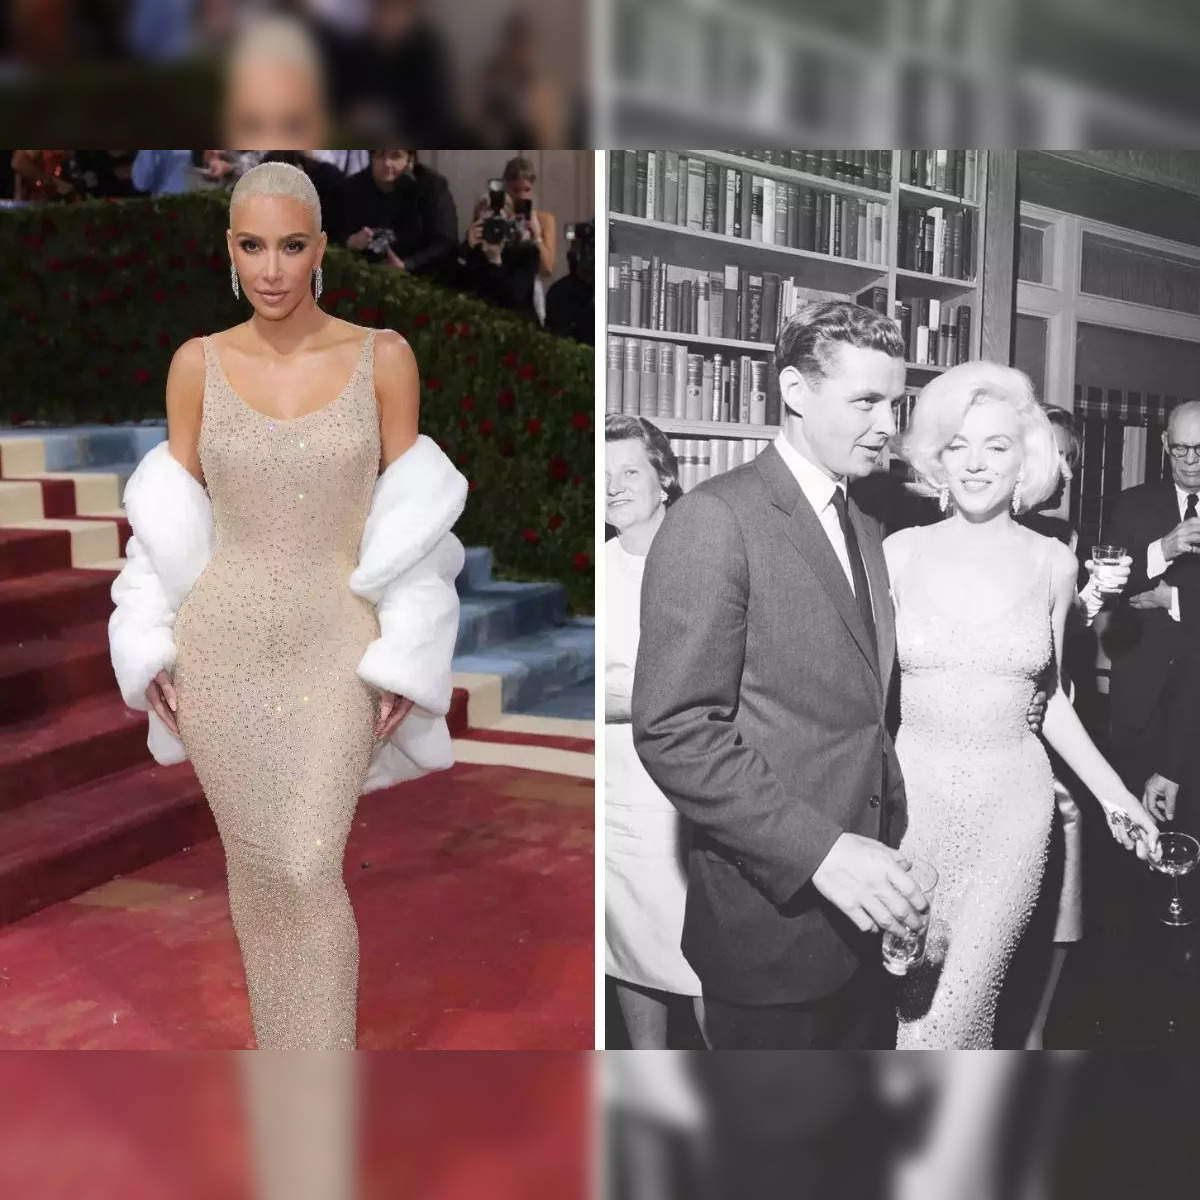 Owner of Marilyn Monroe dress says Kim Kardashian did not 'in any way'  damage it, Marilyn Monroe